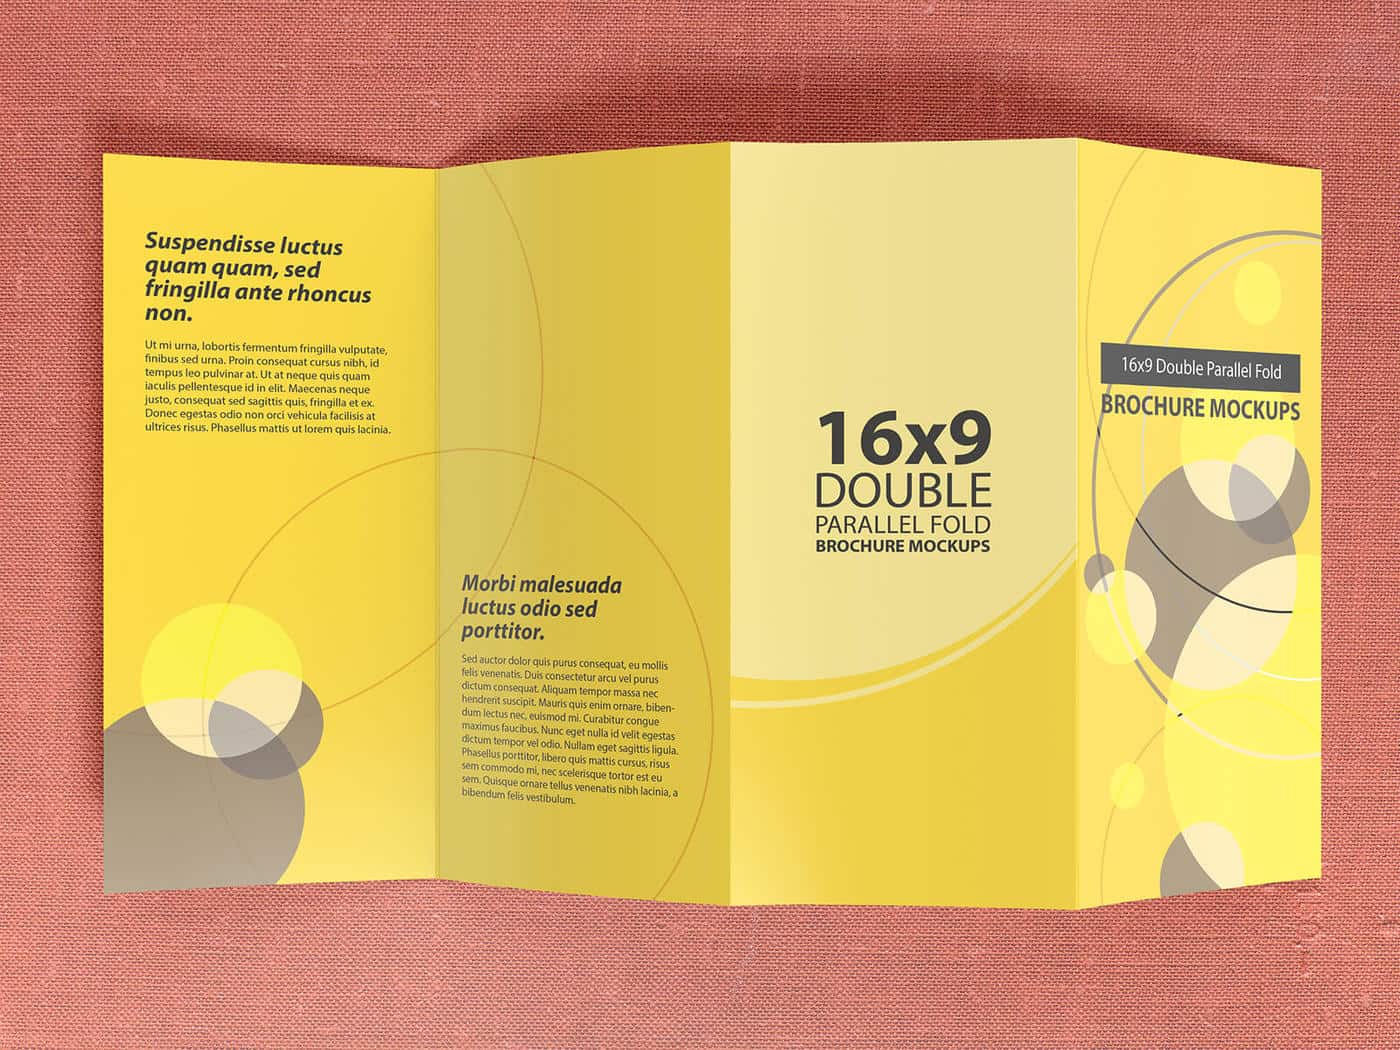 16x9 Double Parallel Fold Brochure Mockups